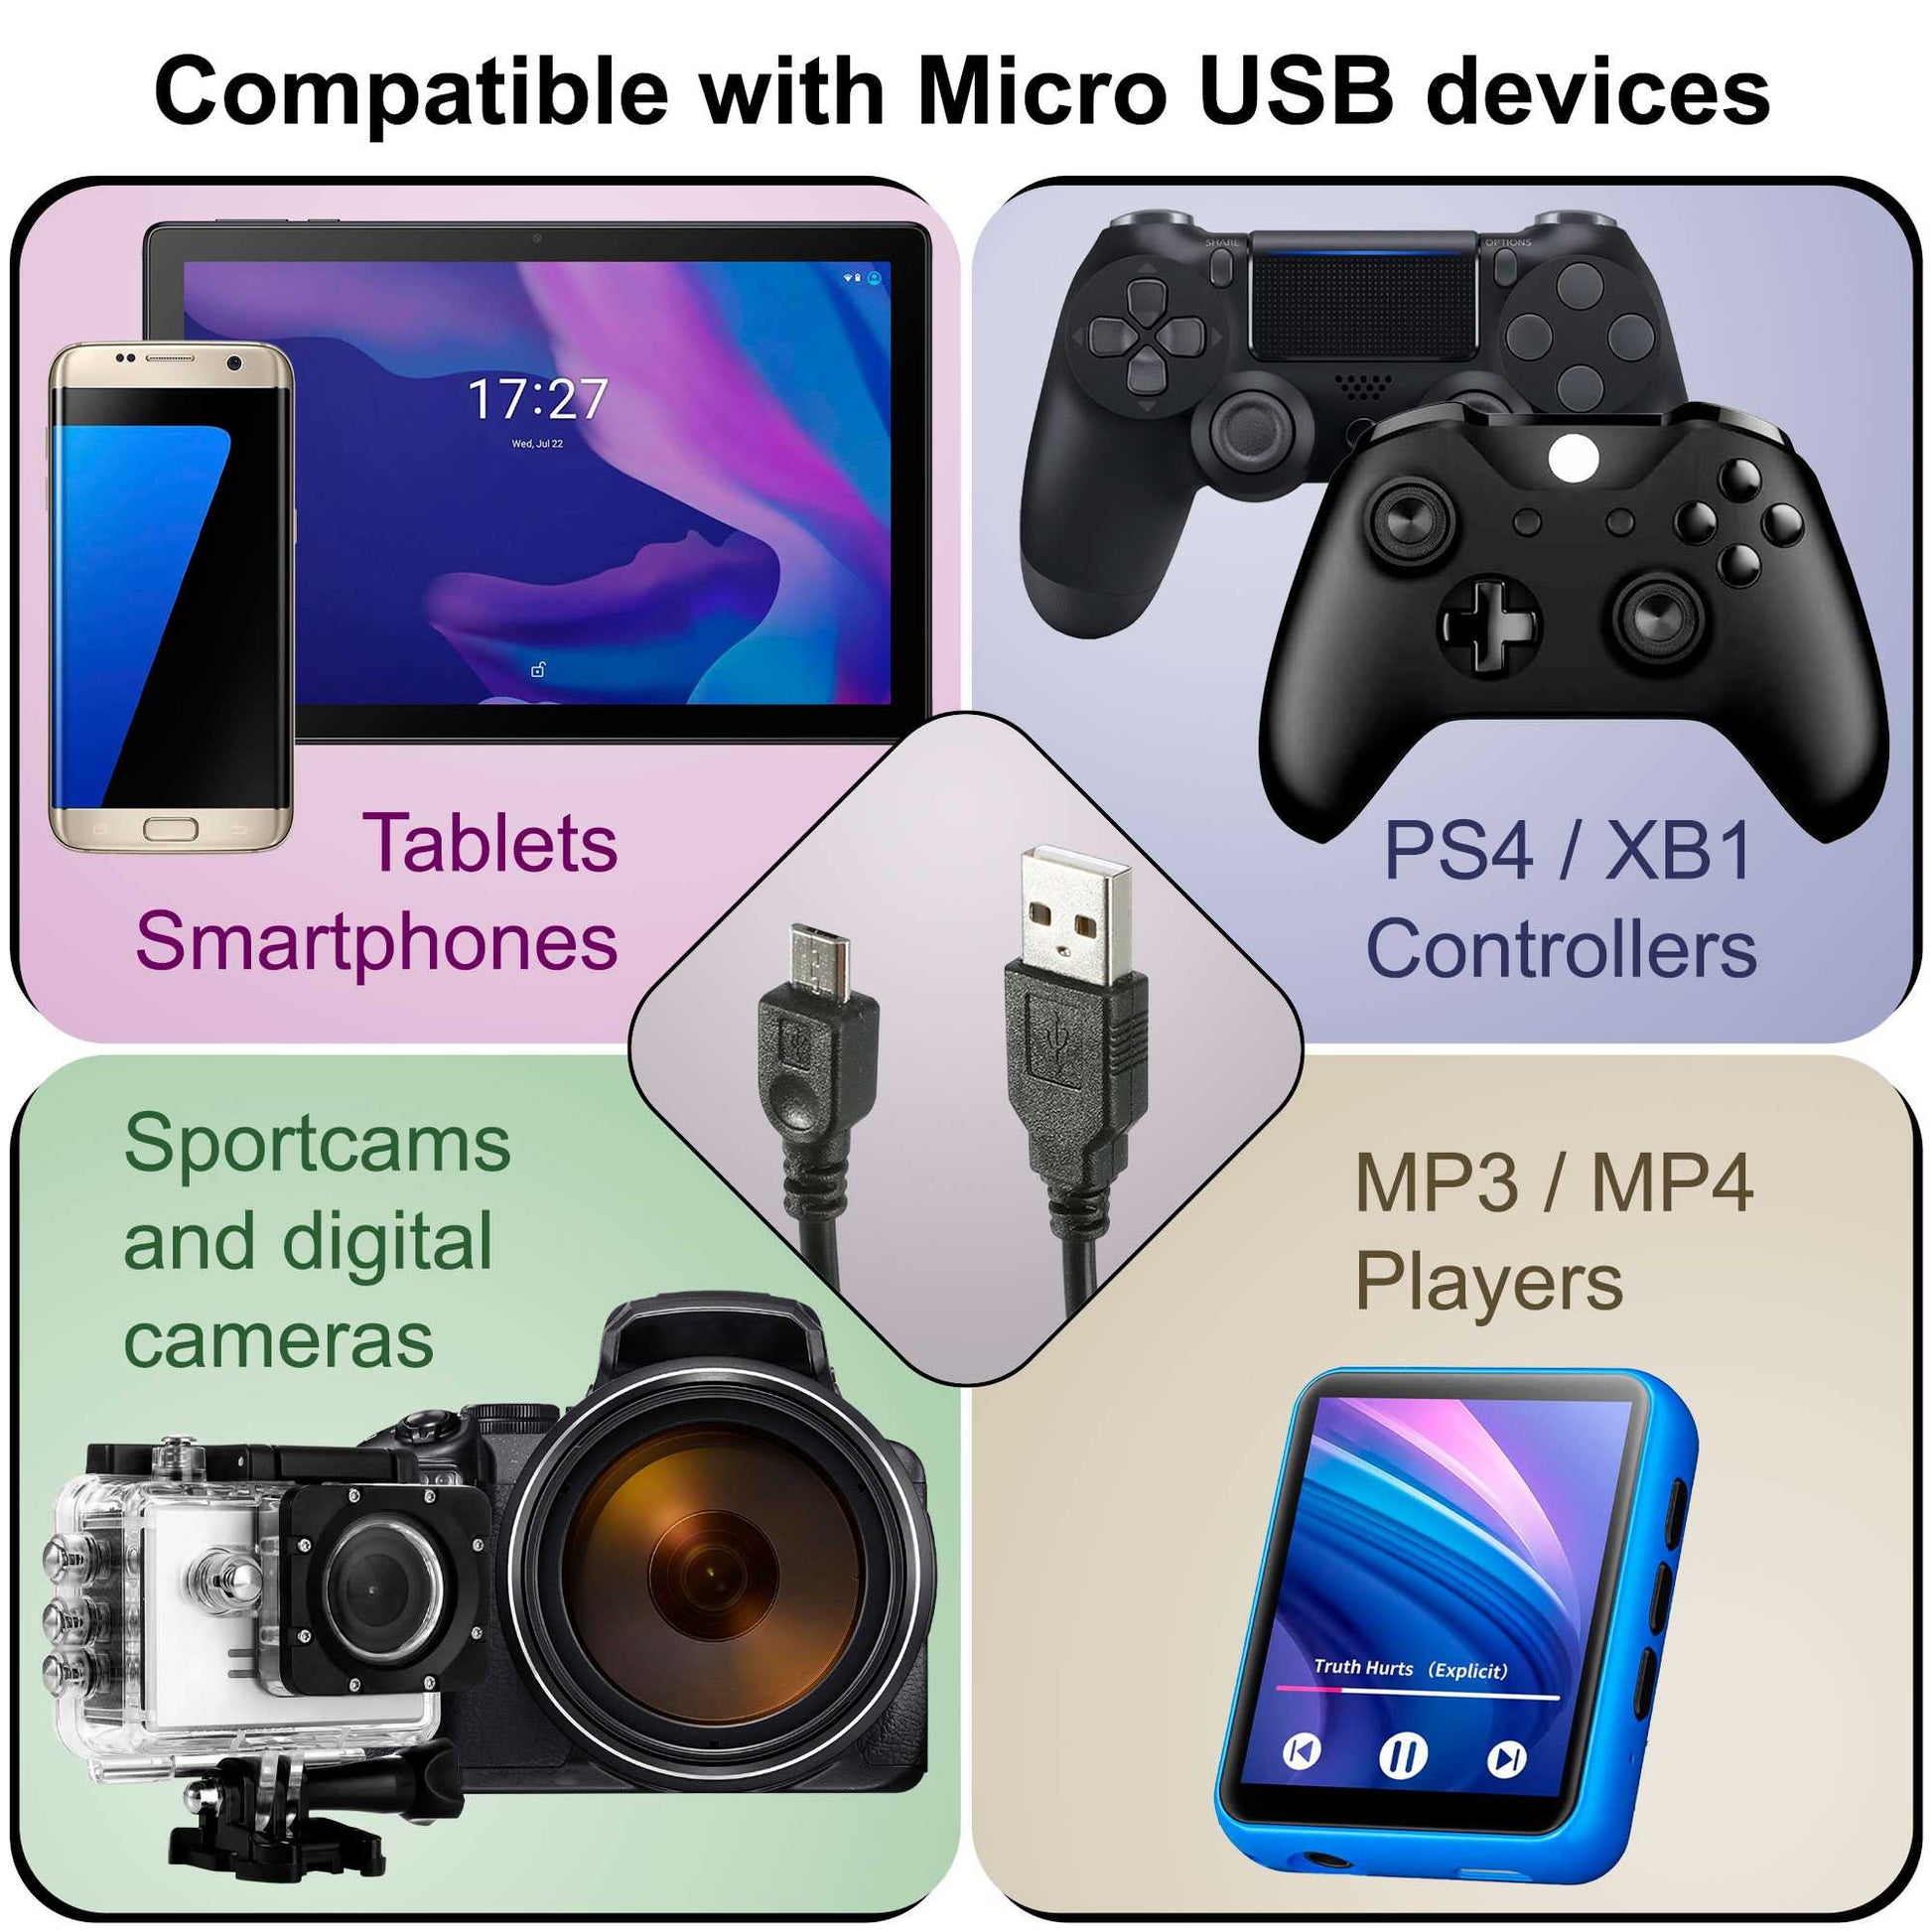 Cable de Carga y Datos 3m USB a Micro 5 Pin Negro para Smartphones Tablets MP3 MP4 Cámaras